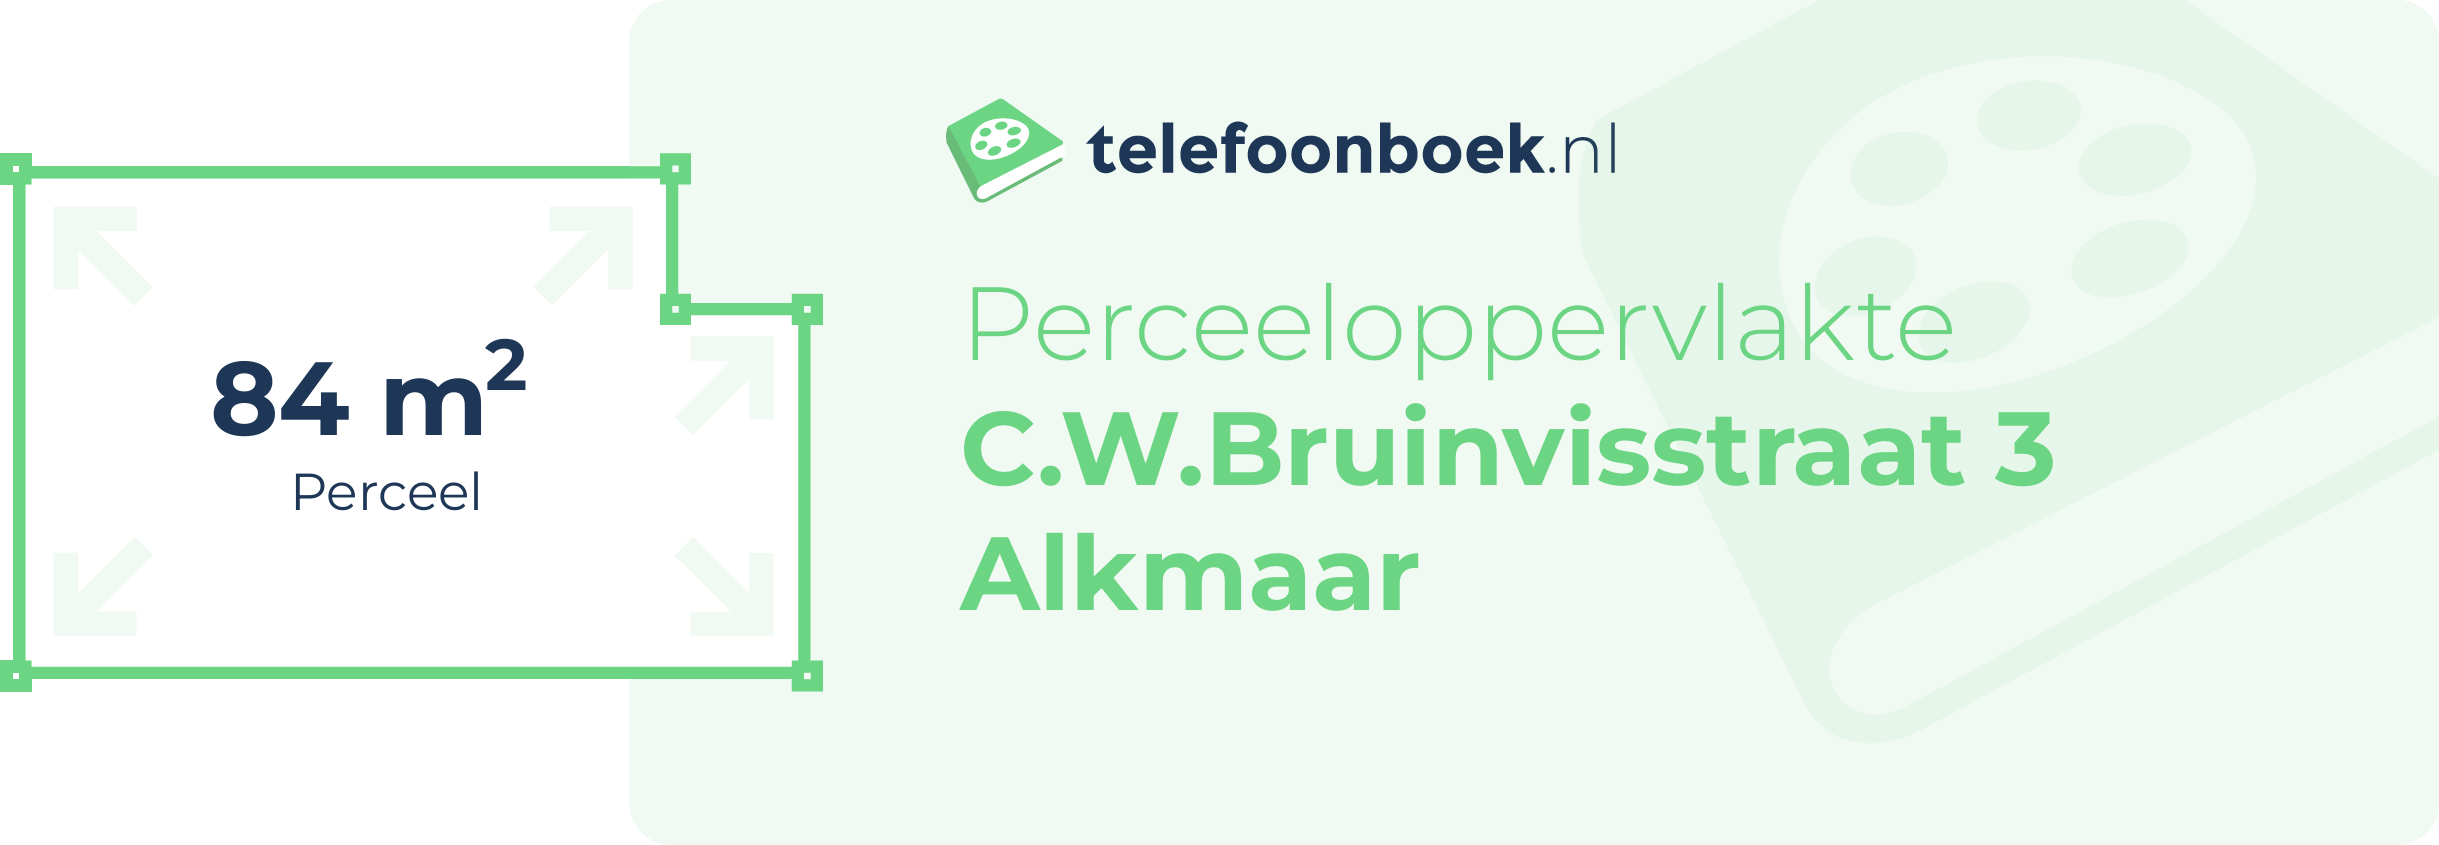 Perceeloppervlakte C.W.Bruinvisstraat 3 Alkmaar